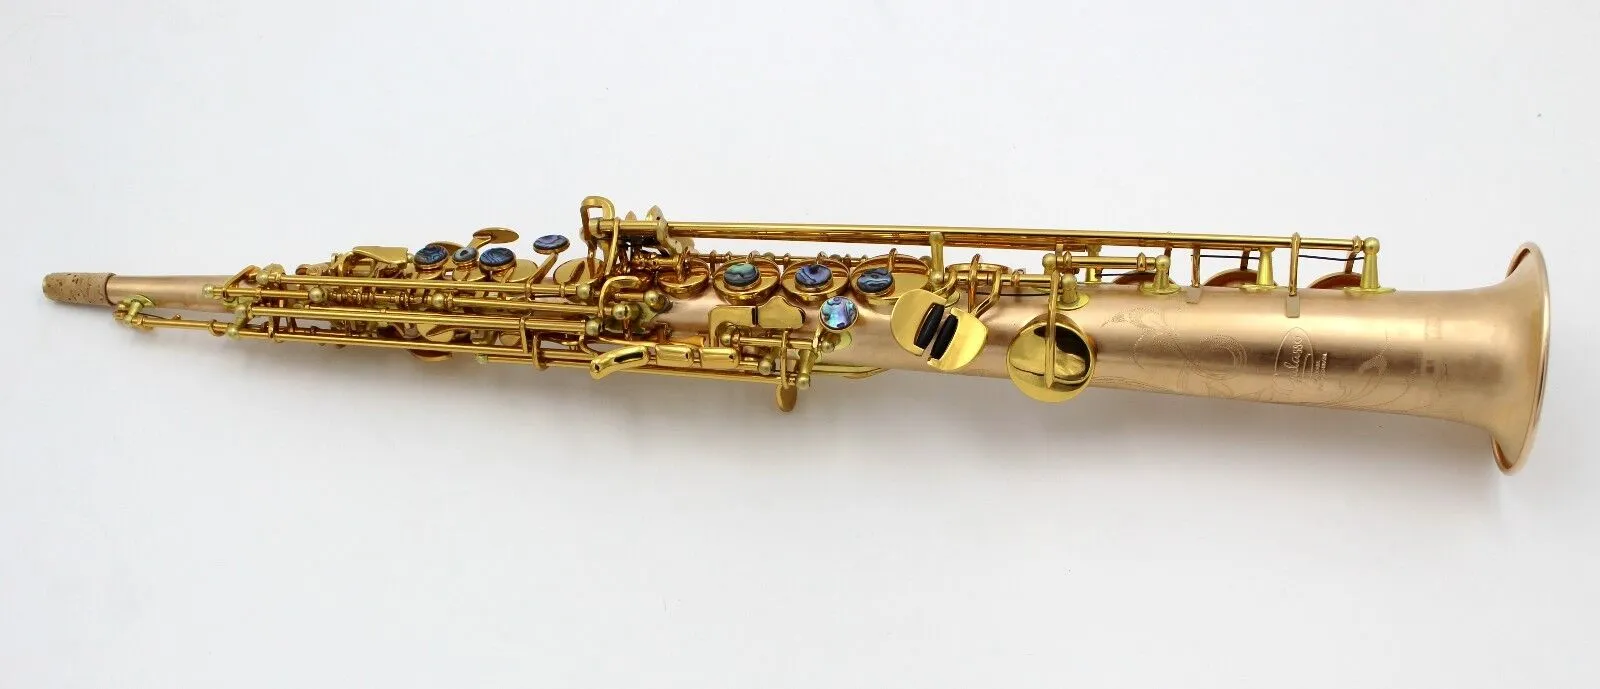 Eastern Music rose brass copper body unlacquer straight soprano saxophone G key